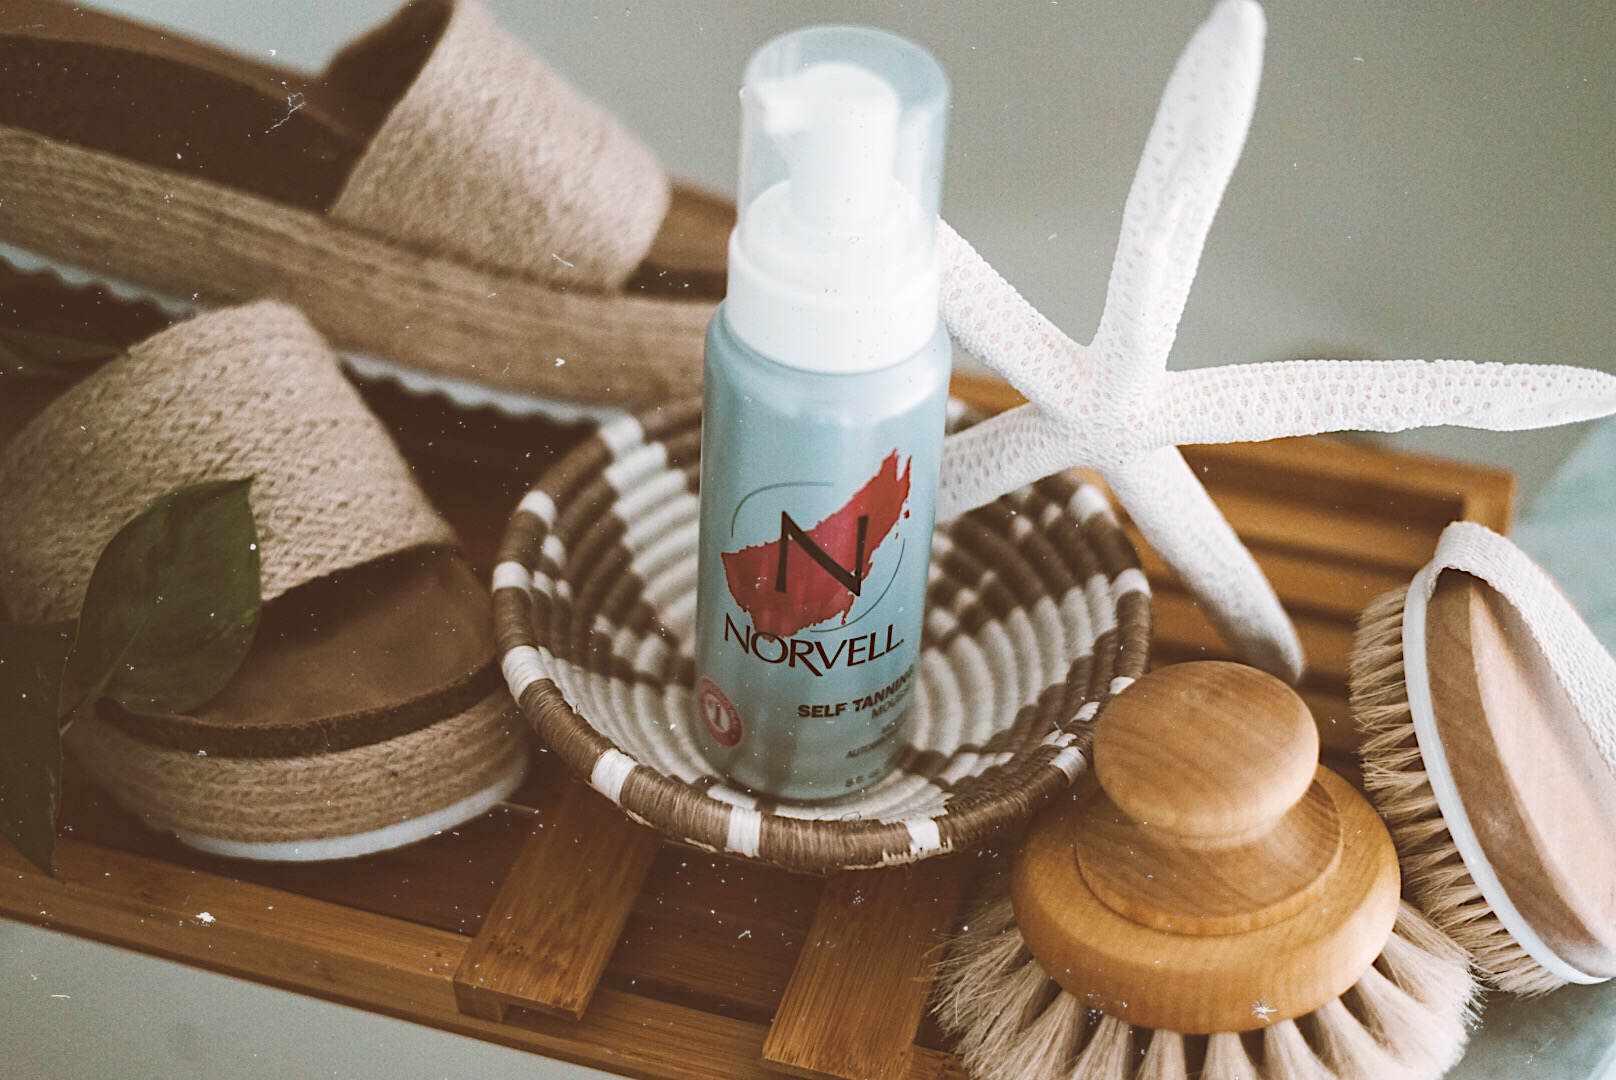 Norvel Spray Tanning